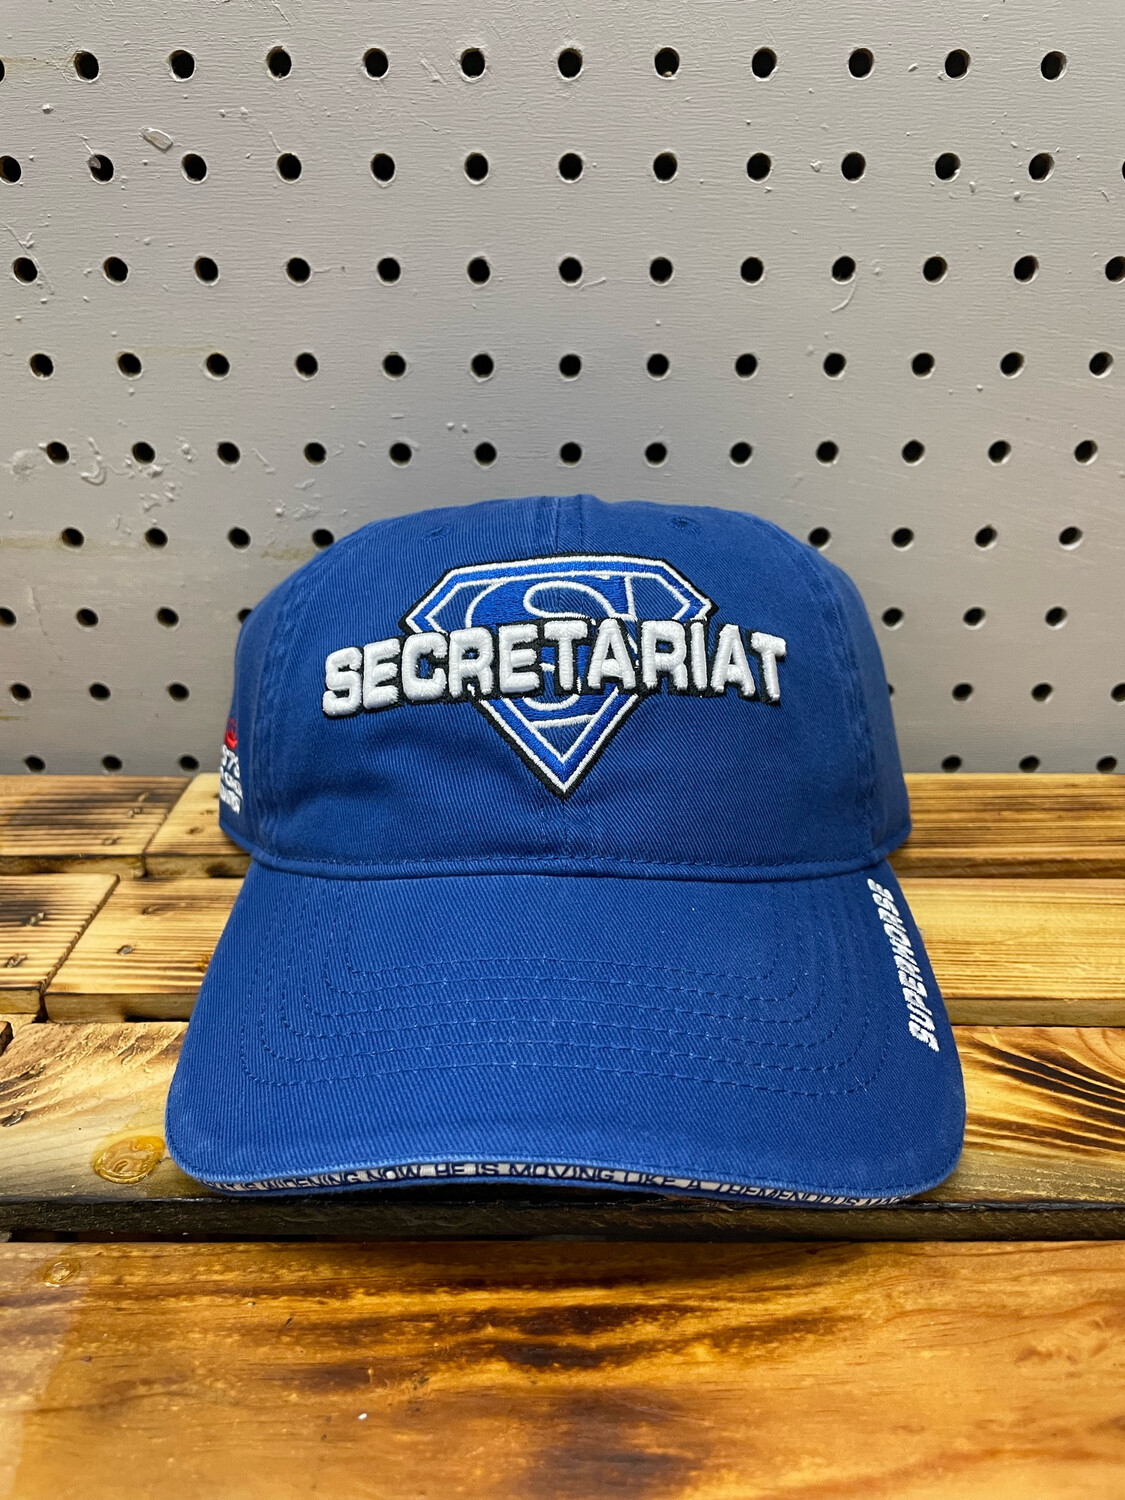 Secretariat Superhorse Cap Blue